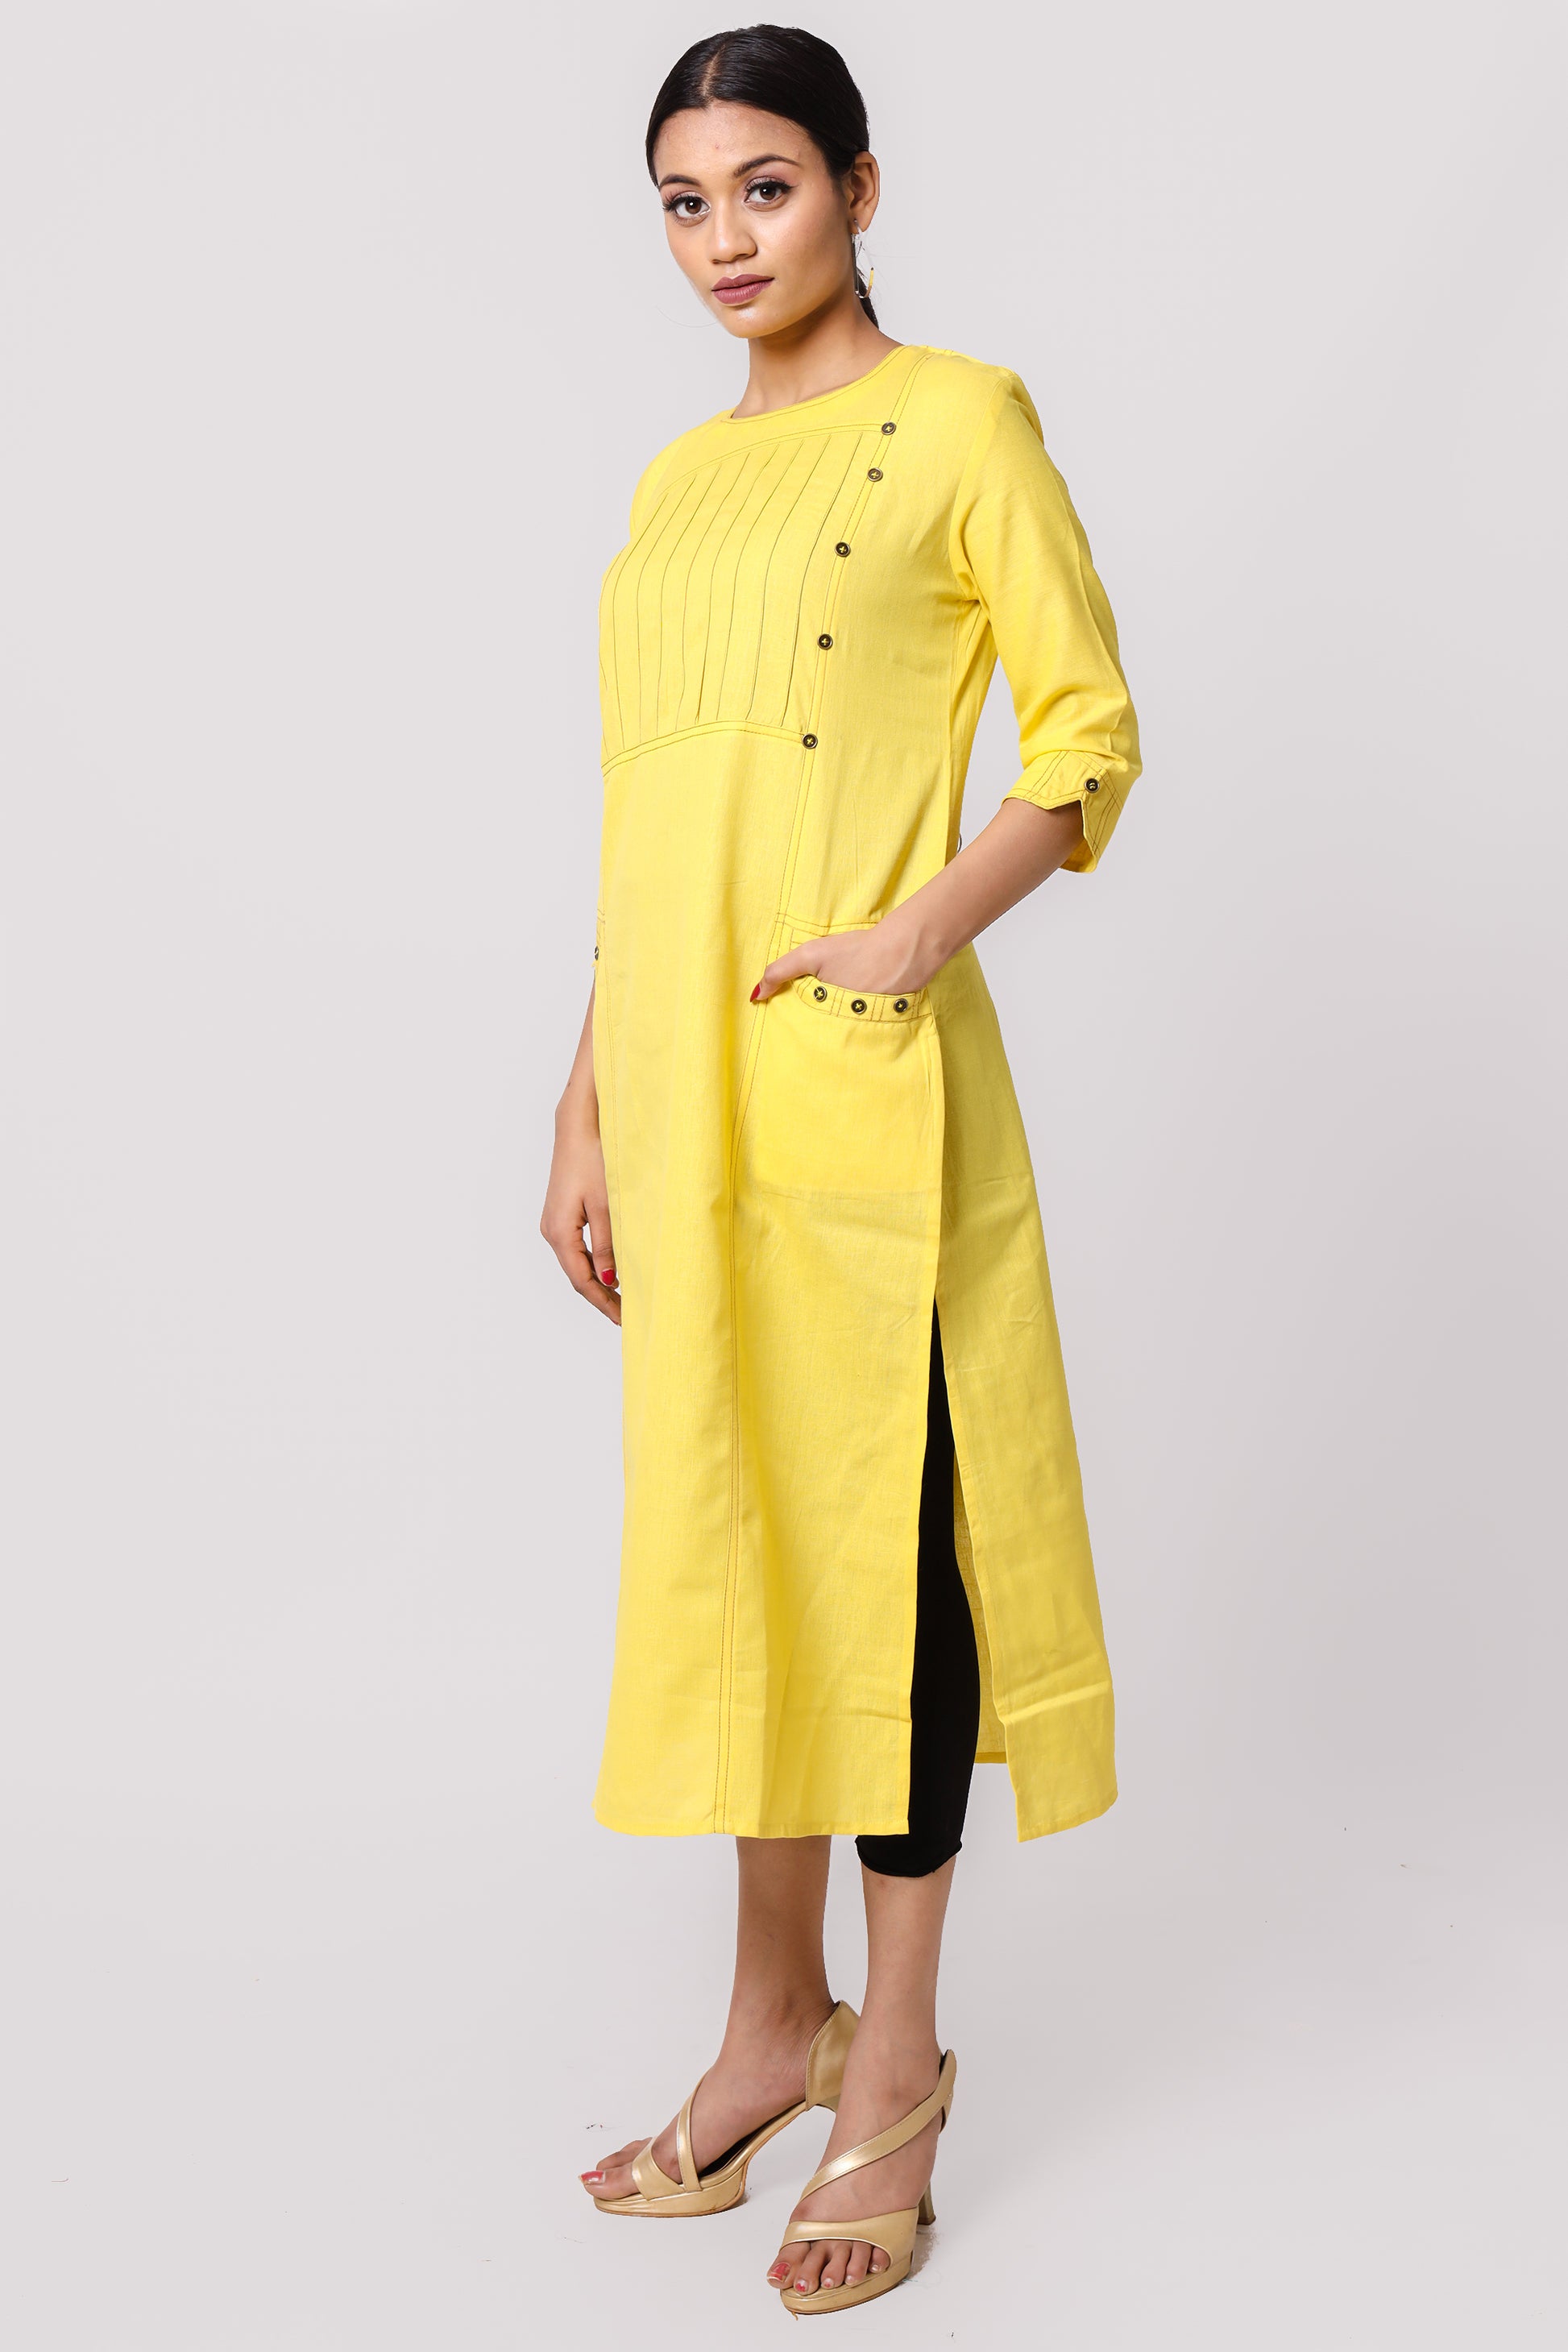 Silkfab Women's Cotton Flax Kurta Side Pin Tucks Yellow - SILKFAB